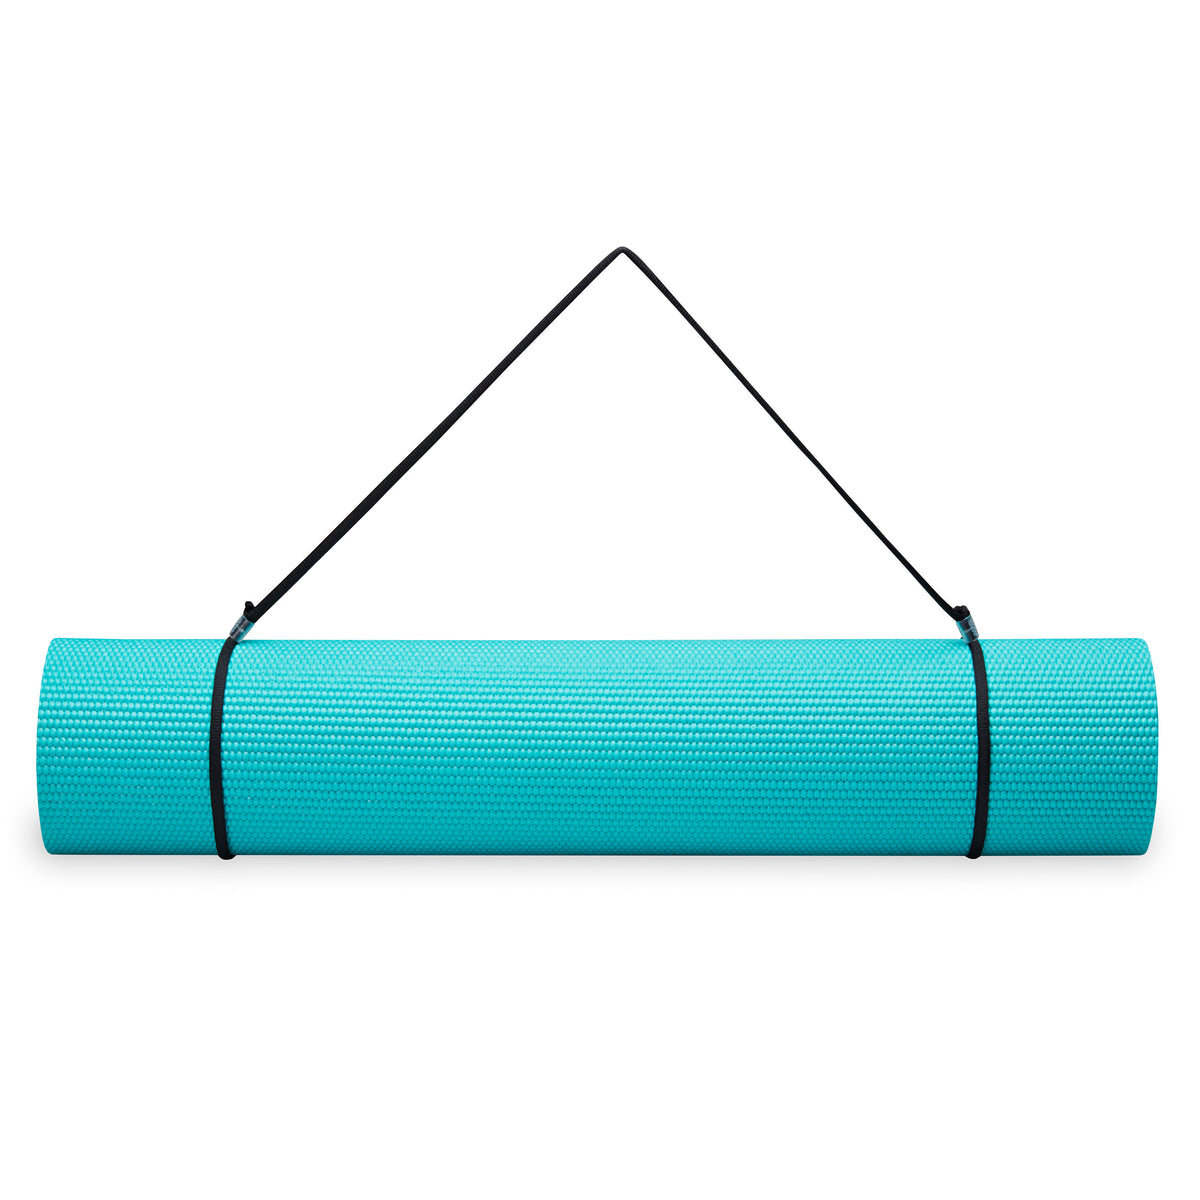 Gaiam Performance Yoga Mat - Maroon/Teal Blue (6mm)